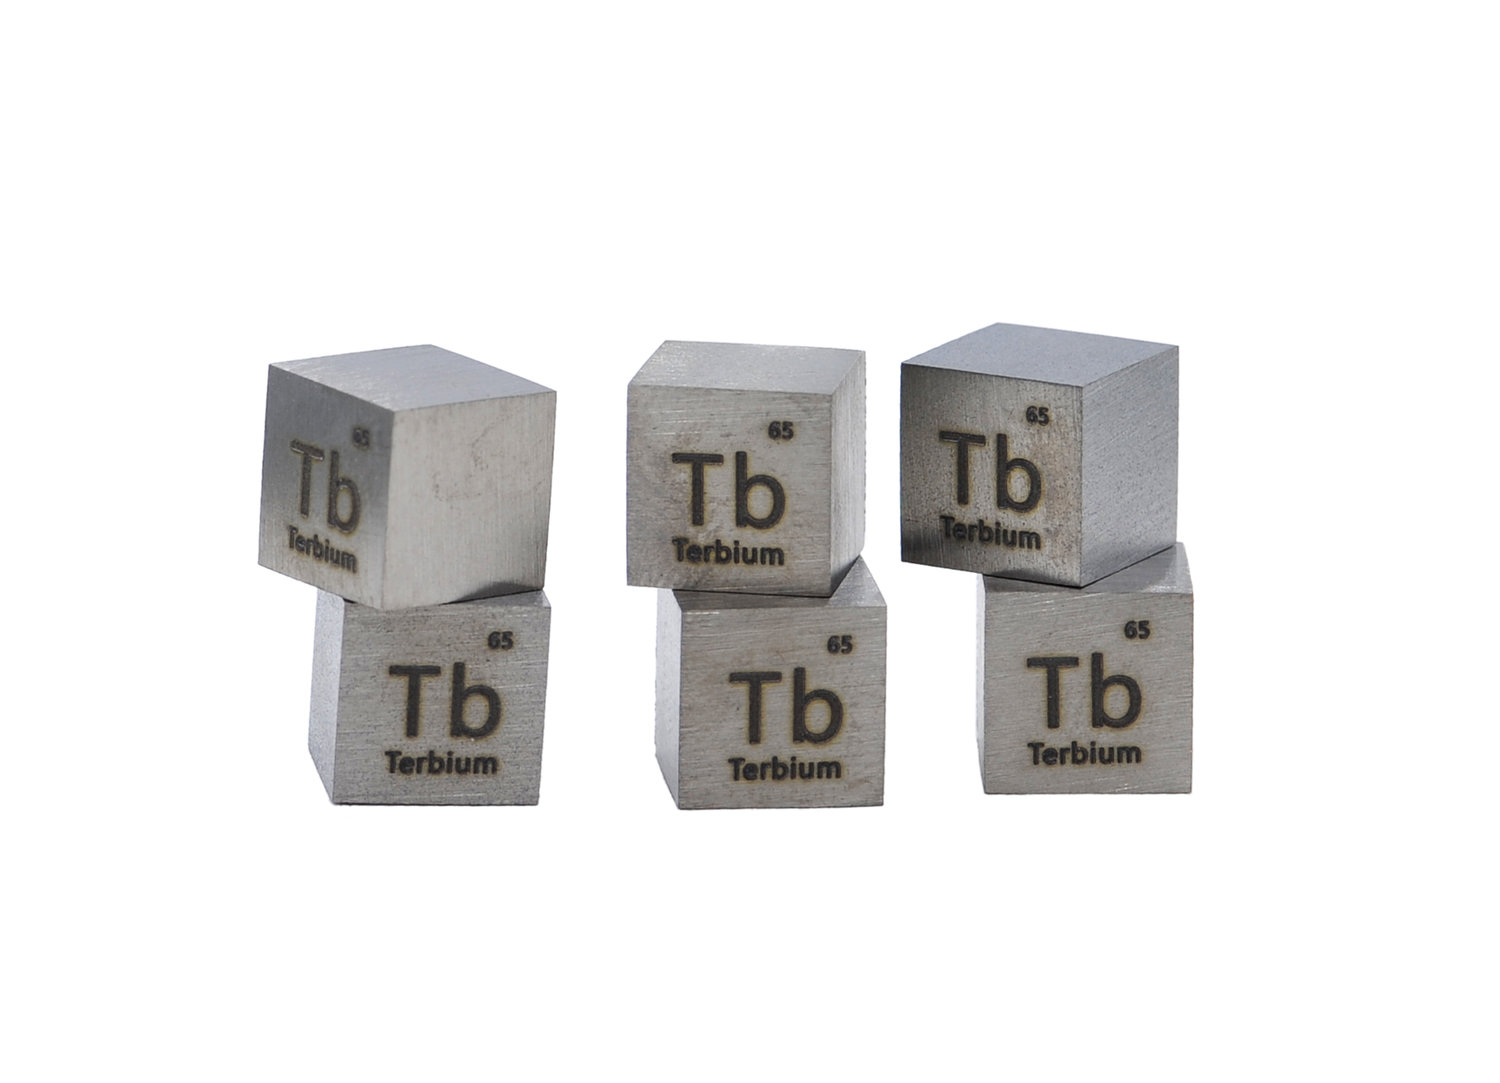 Плотный куб. Тербий элемент. Тербий металлический. Manganese Metal Cube. Кубики плотный пластик.